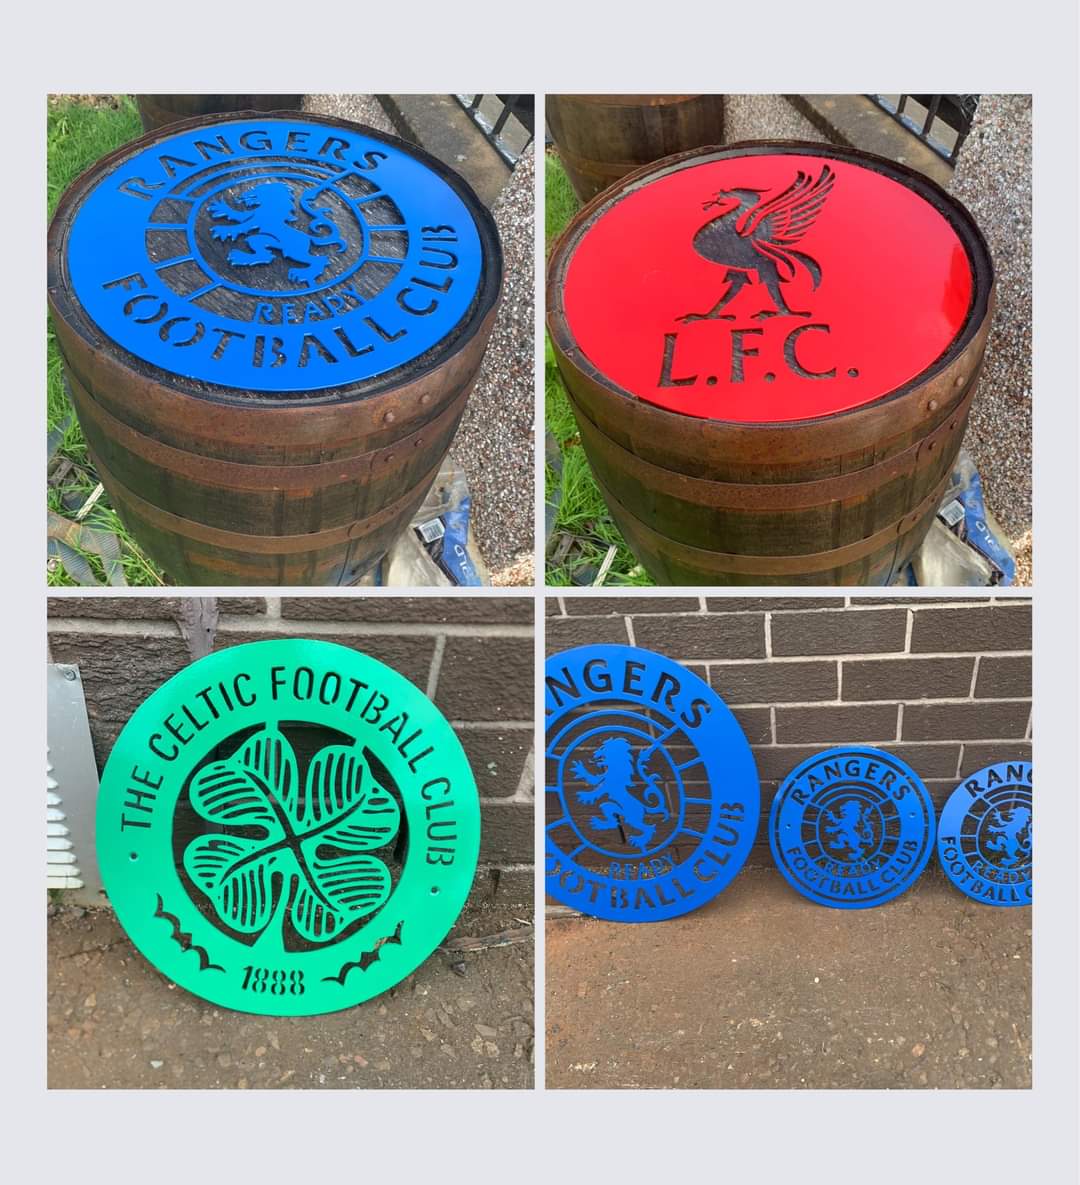 Examples of CNC machine cut football badges perfect for barrel tops or signage for mancaves! #rangersfc #celticfc #liverpool #football #crest #cnc #cncplasma #cut #sign #plaque #silhouette #badge #rangers #hearts #artistic #edinburgh #stirling #falkirk #dunfermline #fife #alloa